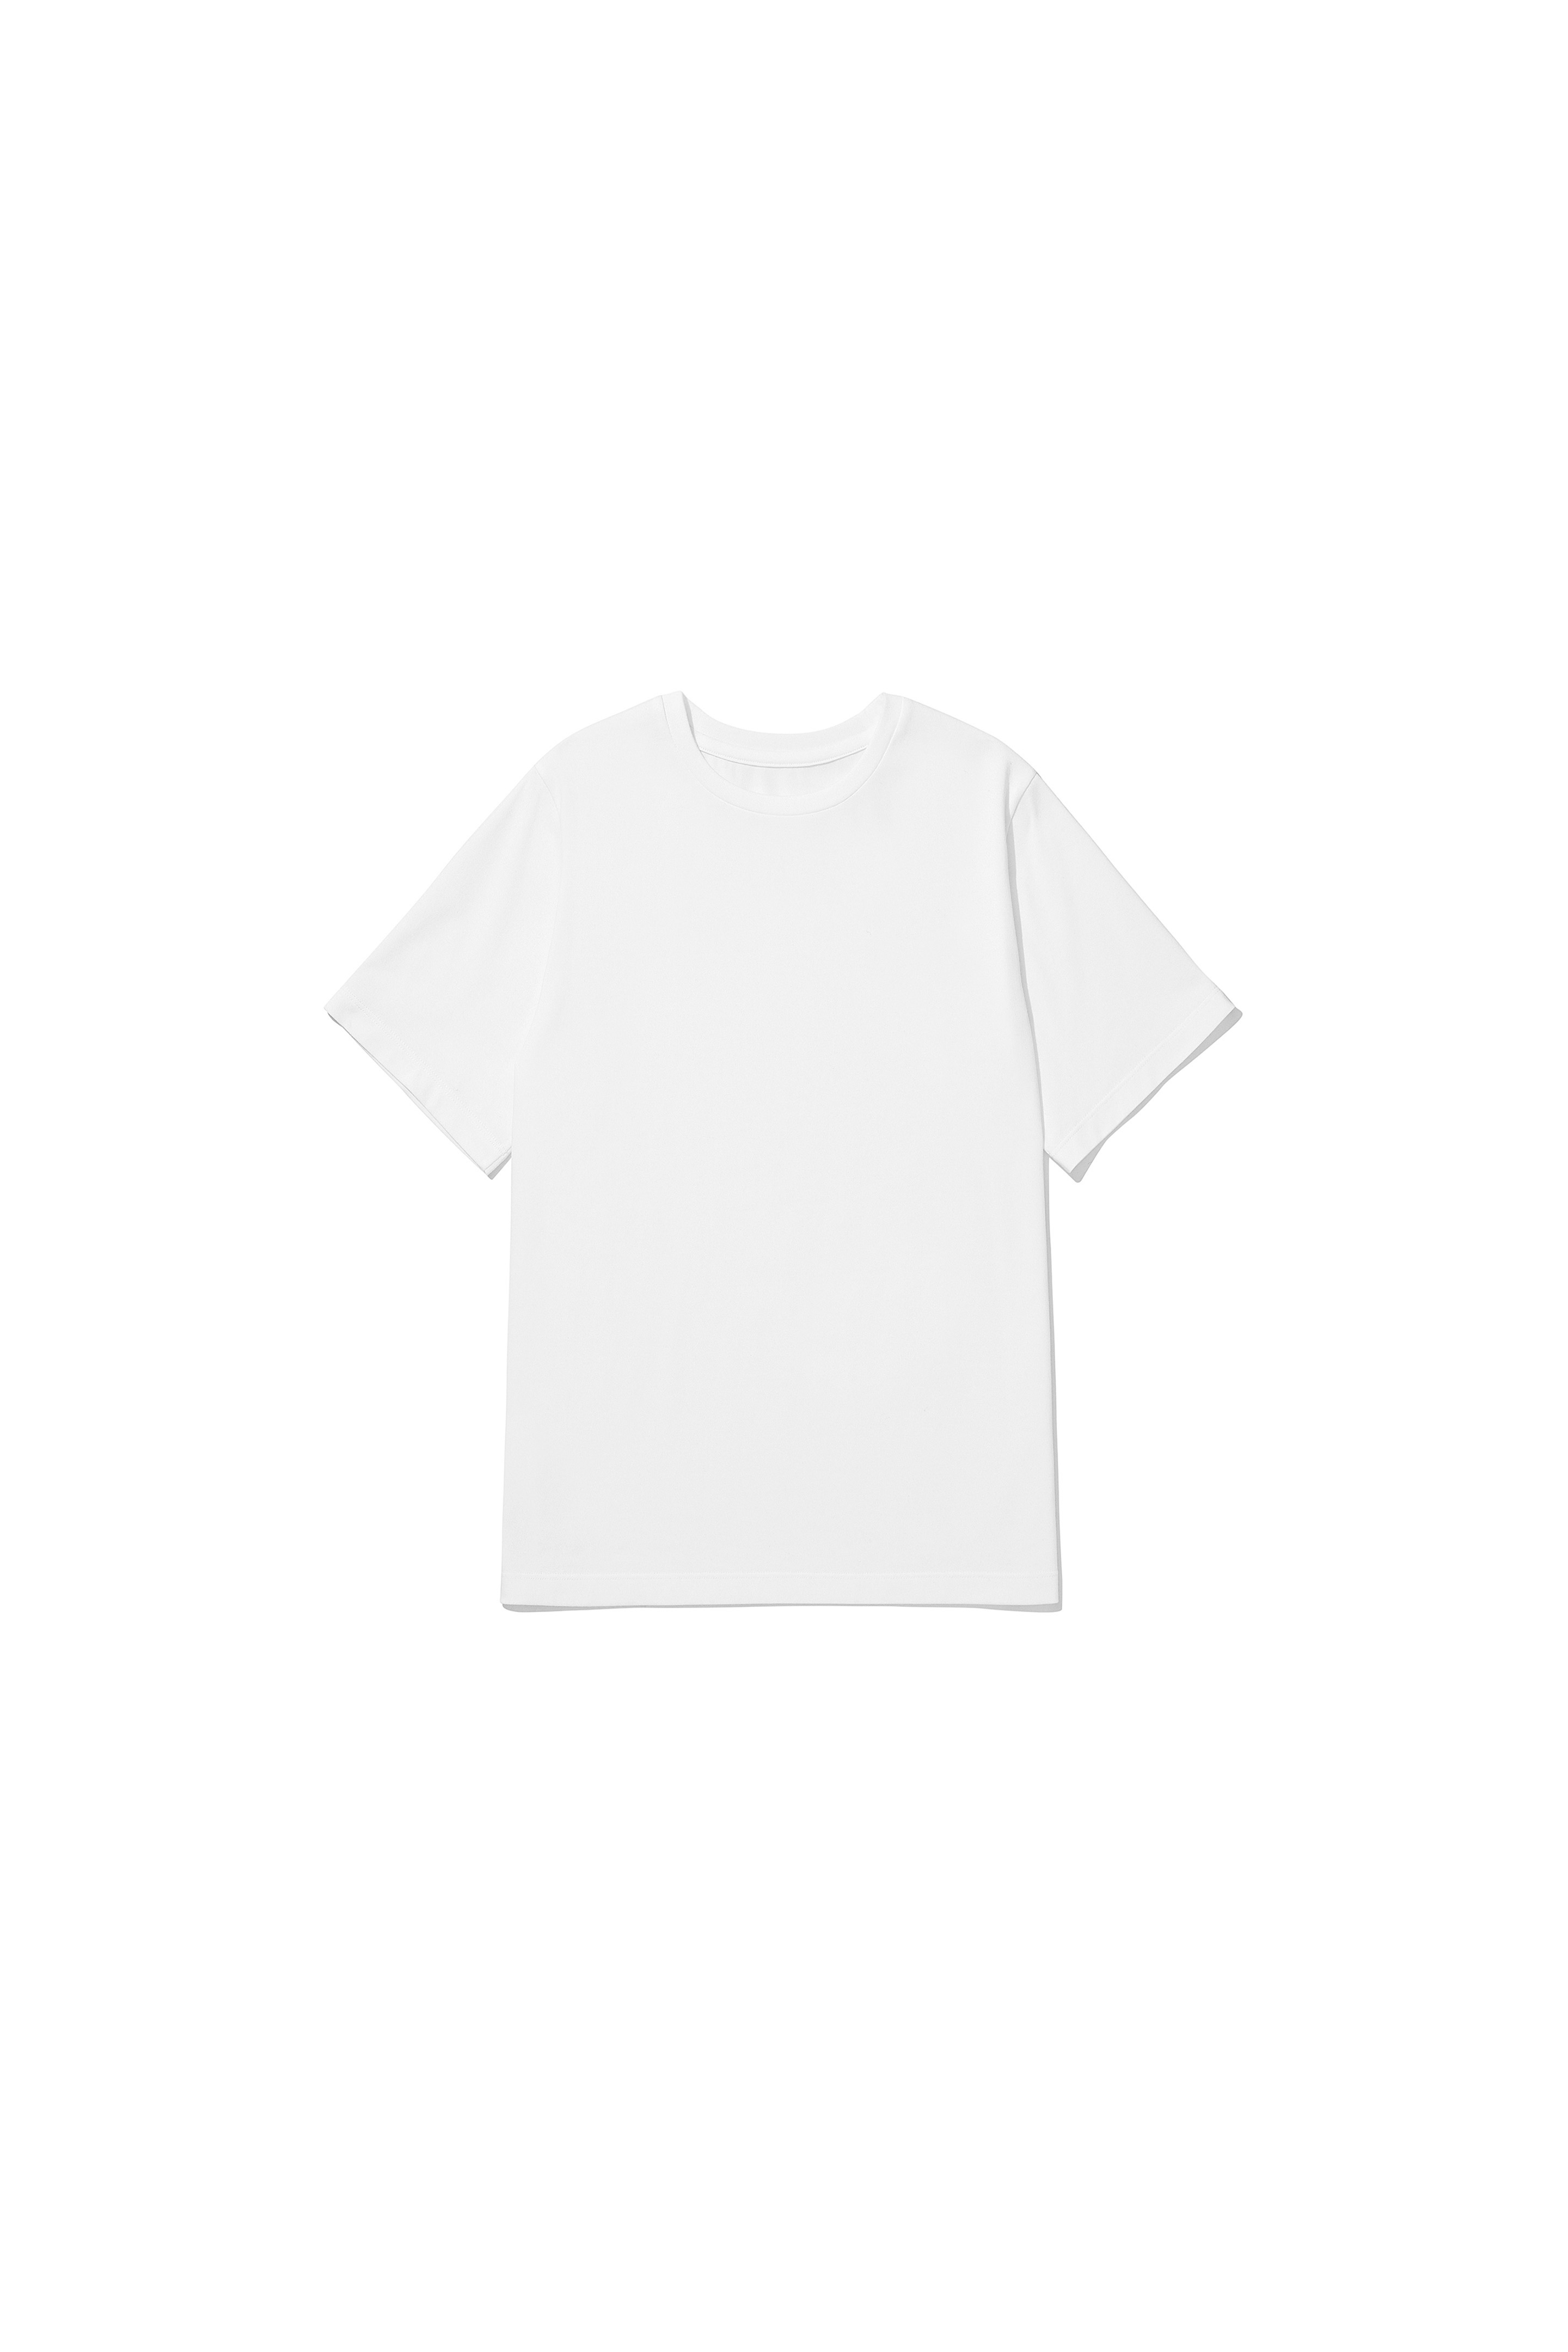 Sliket Cotton T-shirts White [04.25(THU) 20:00 OPEN]